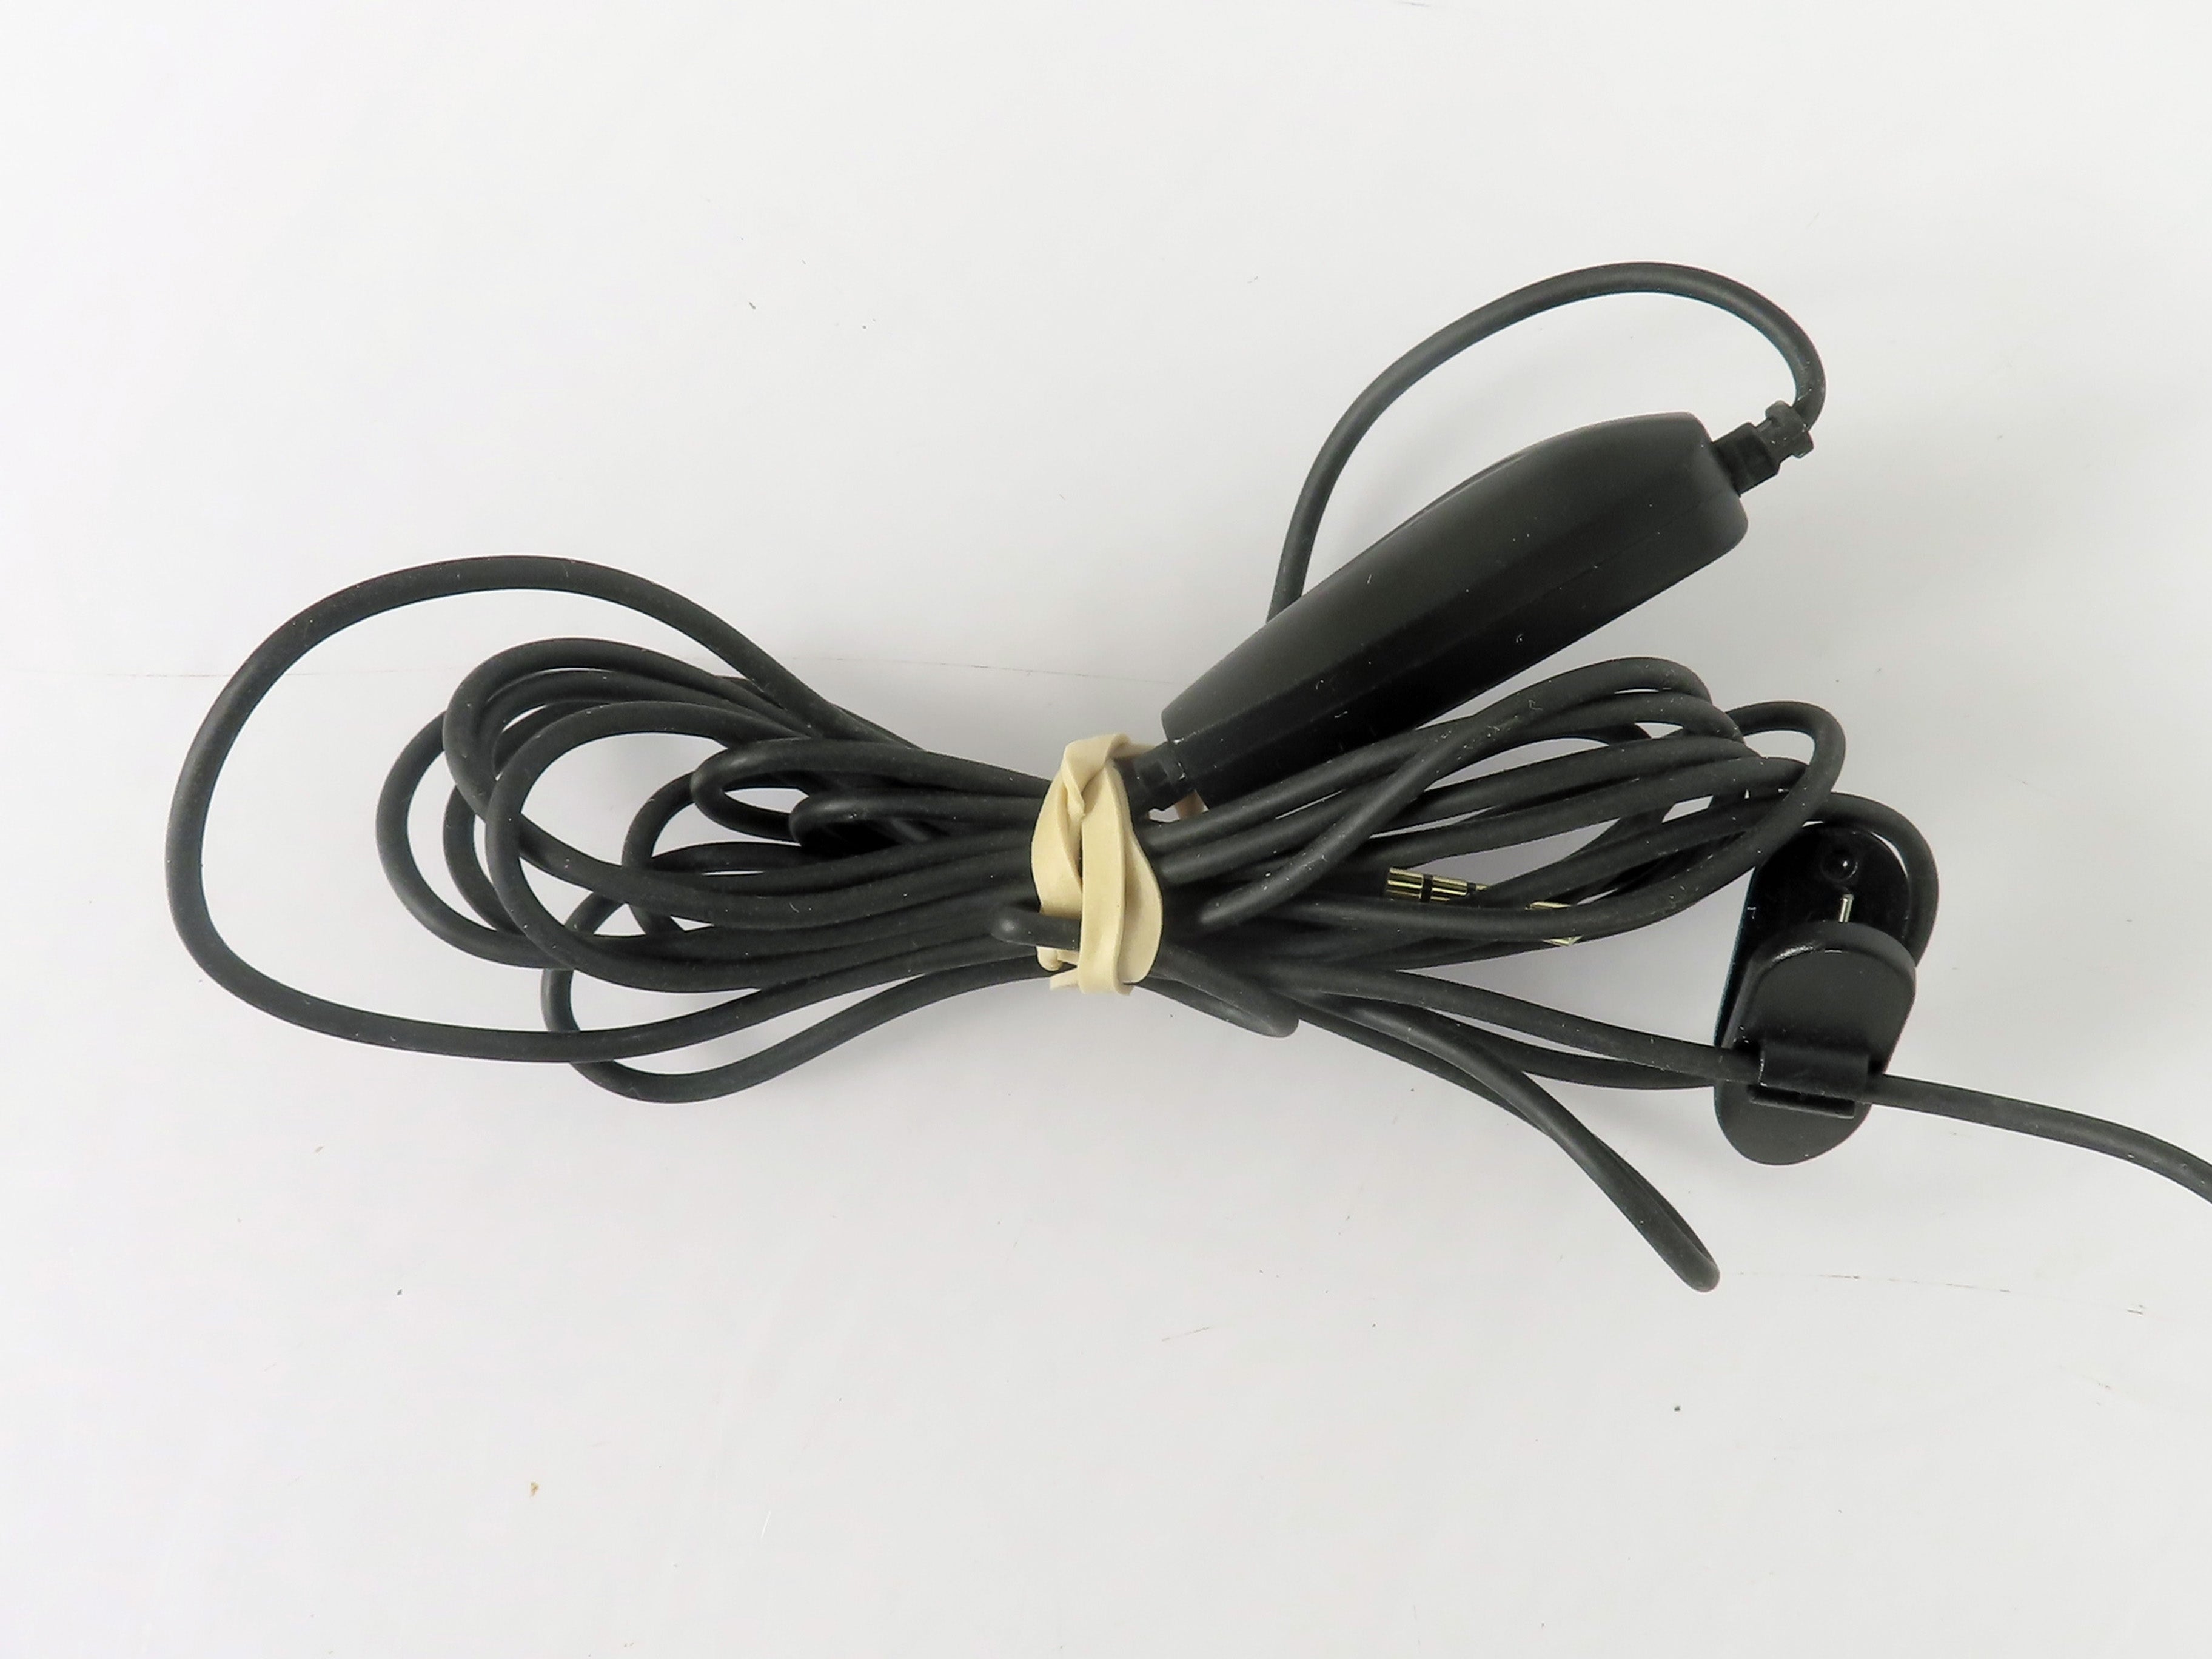 Insignia NS-PAH5101 Black Mono Headset w/ Microphone